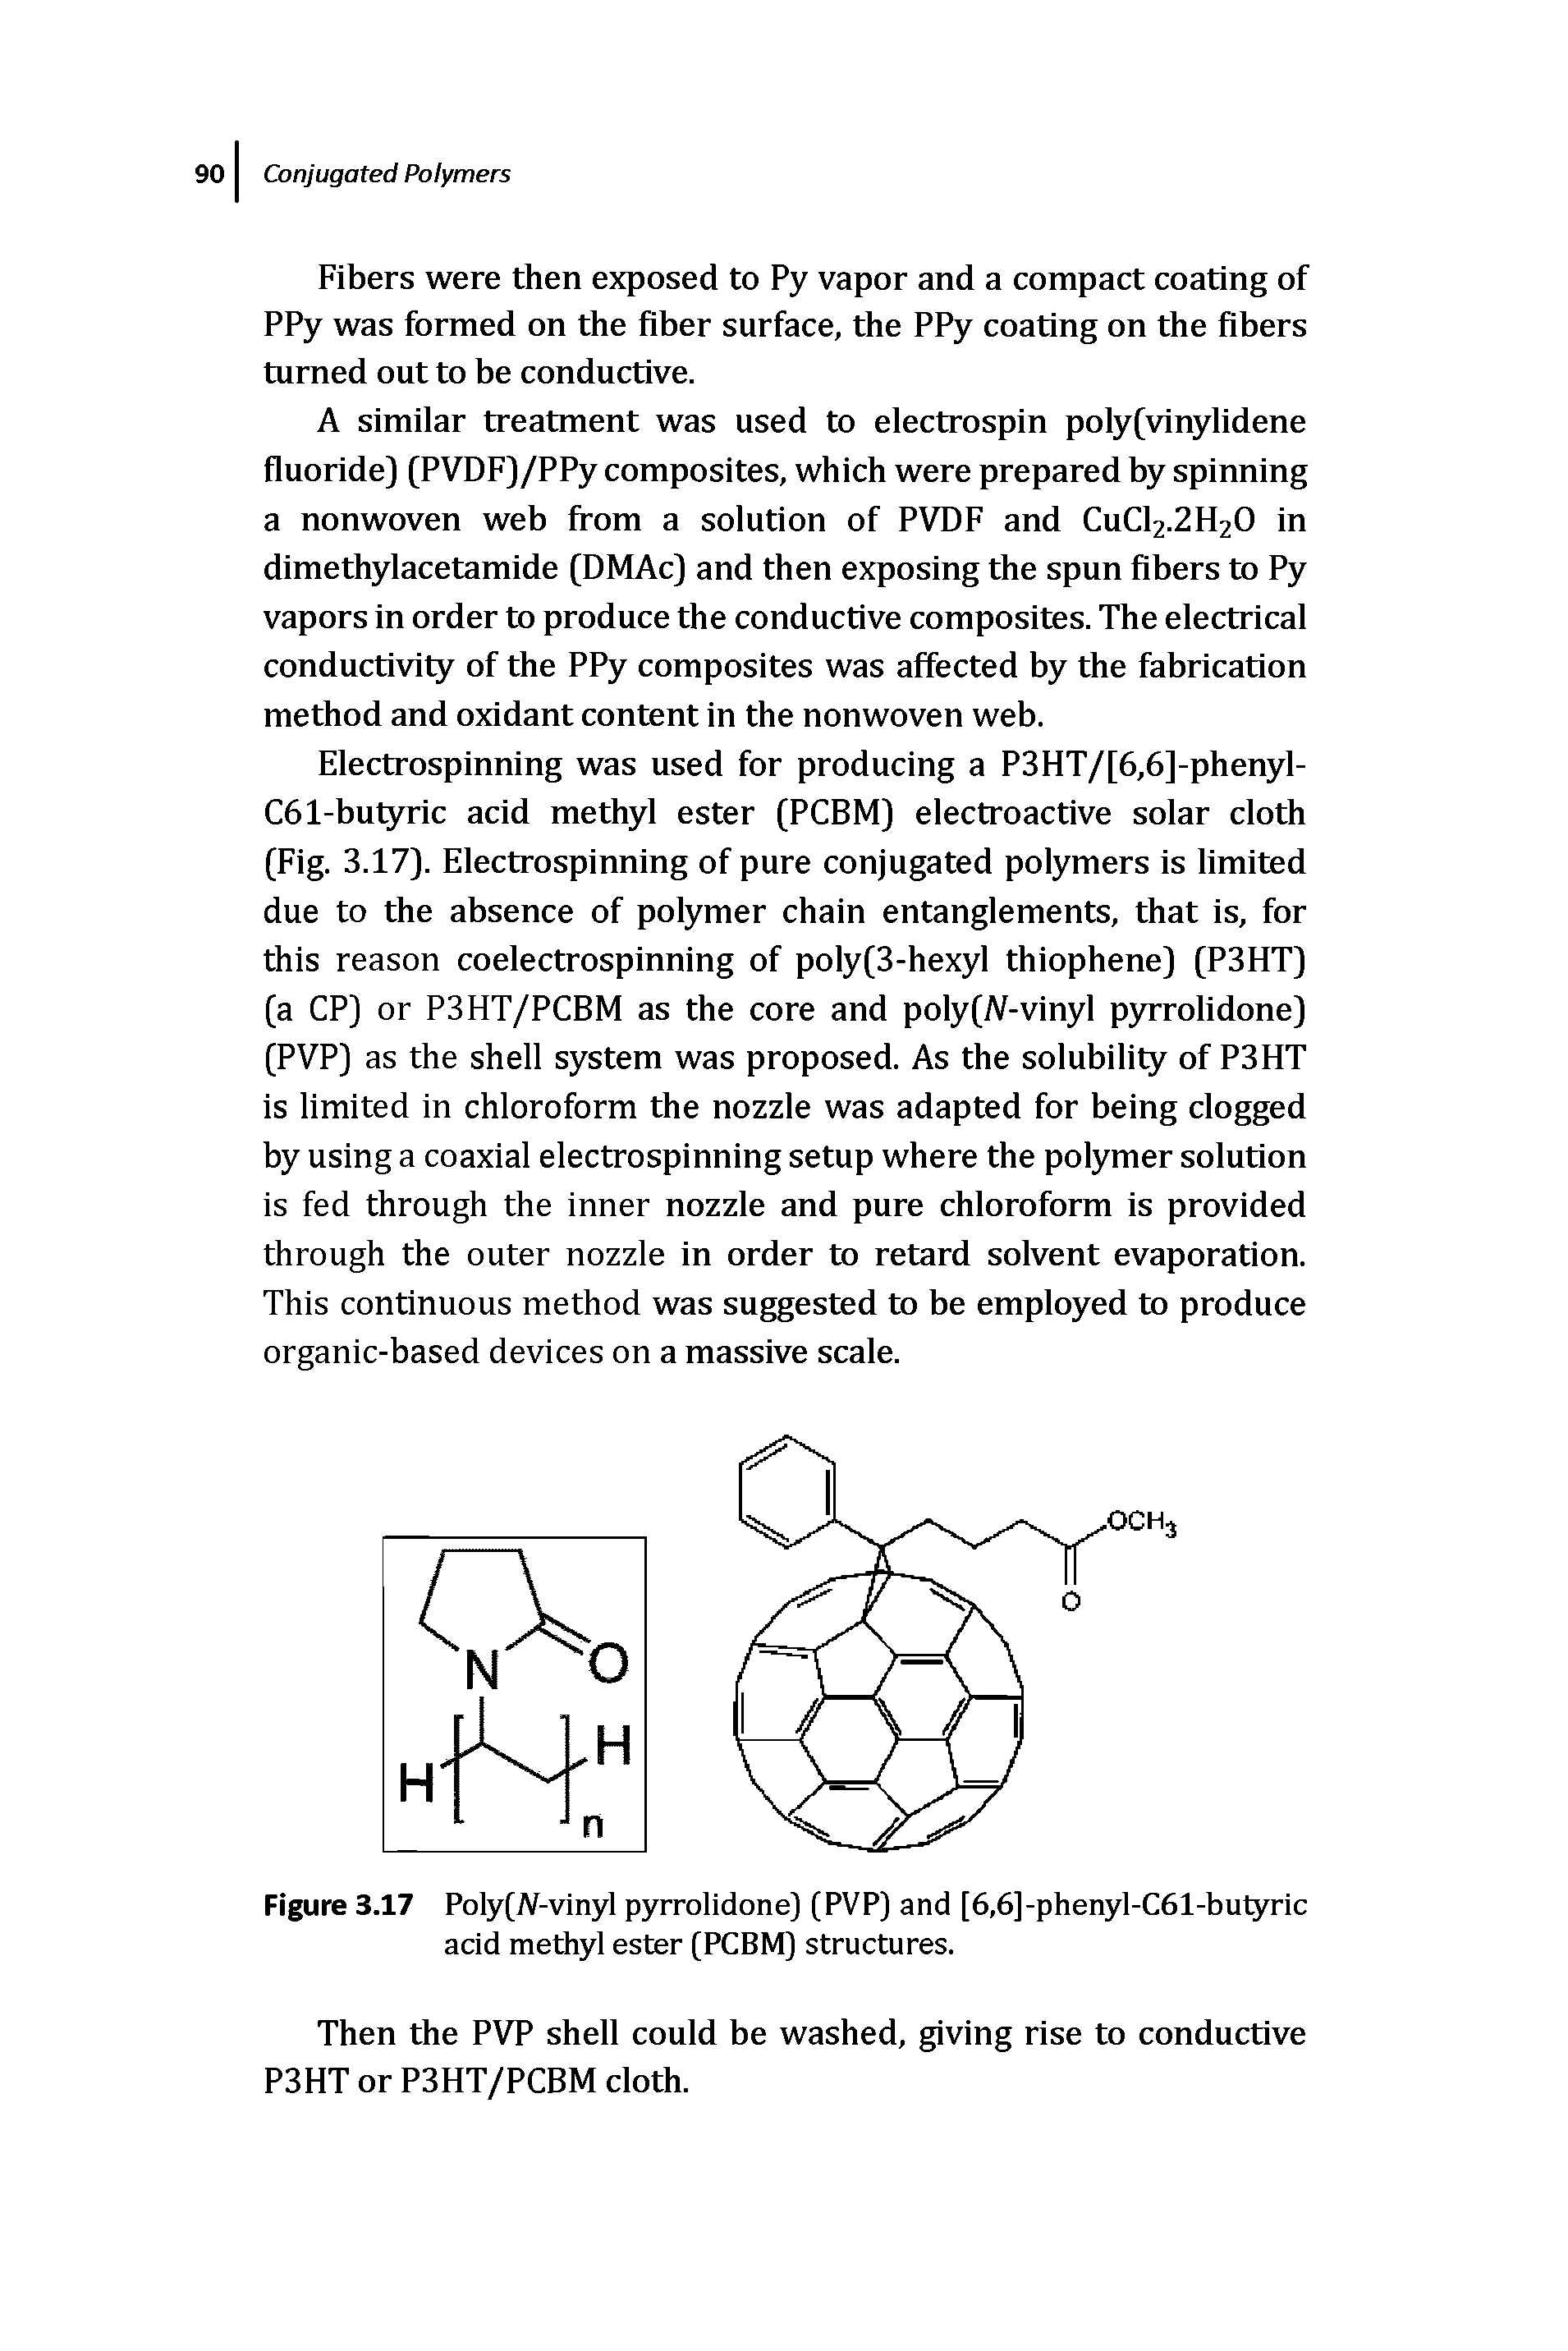 Figure 3.17 Poly(N-vinyl pyrrolidone] (PVP] and [6,6]-phenyl-C61-butyric acid methyl ester (PCBM] structures.